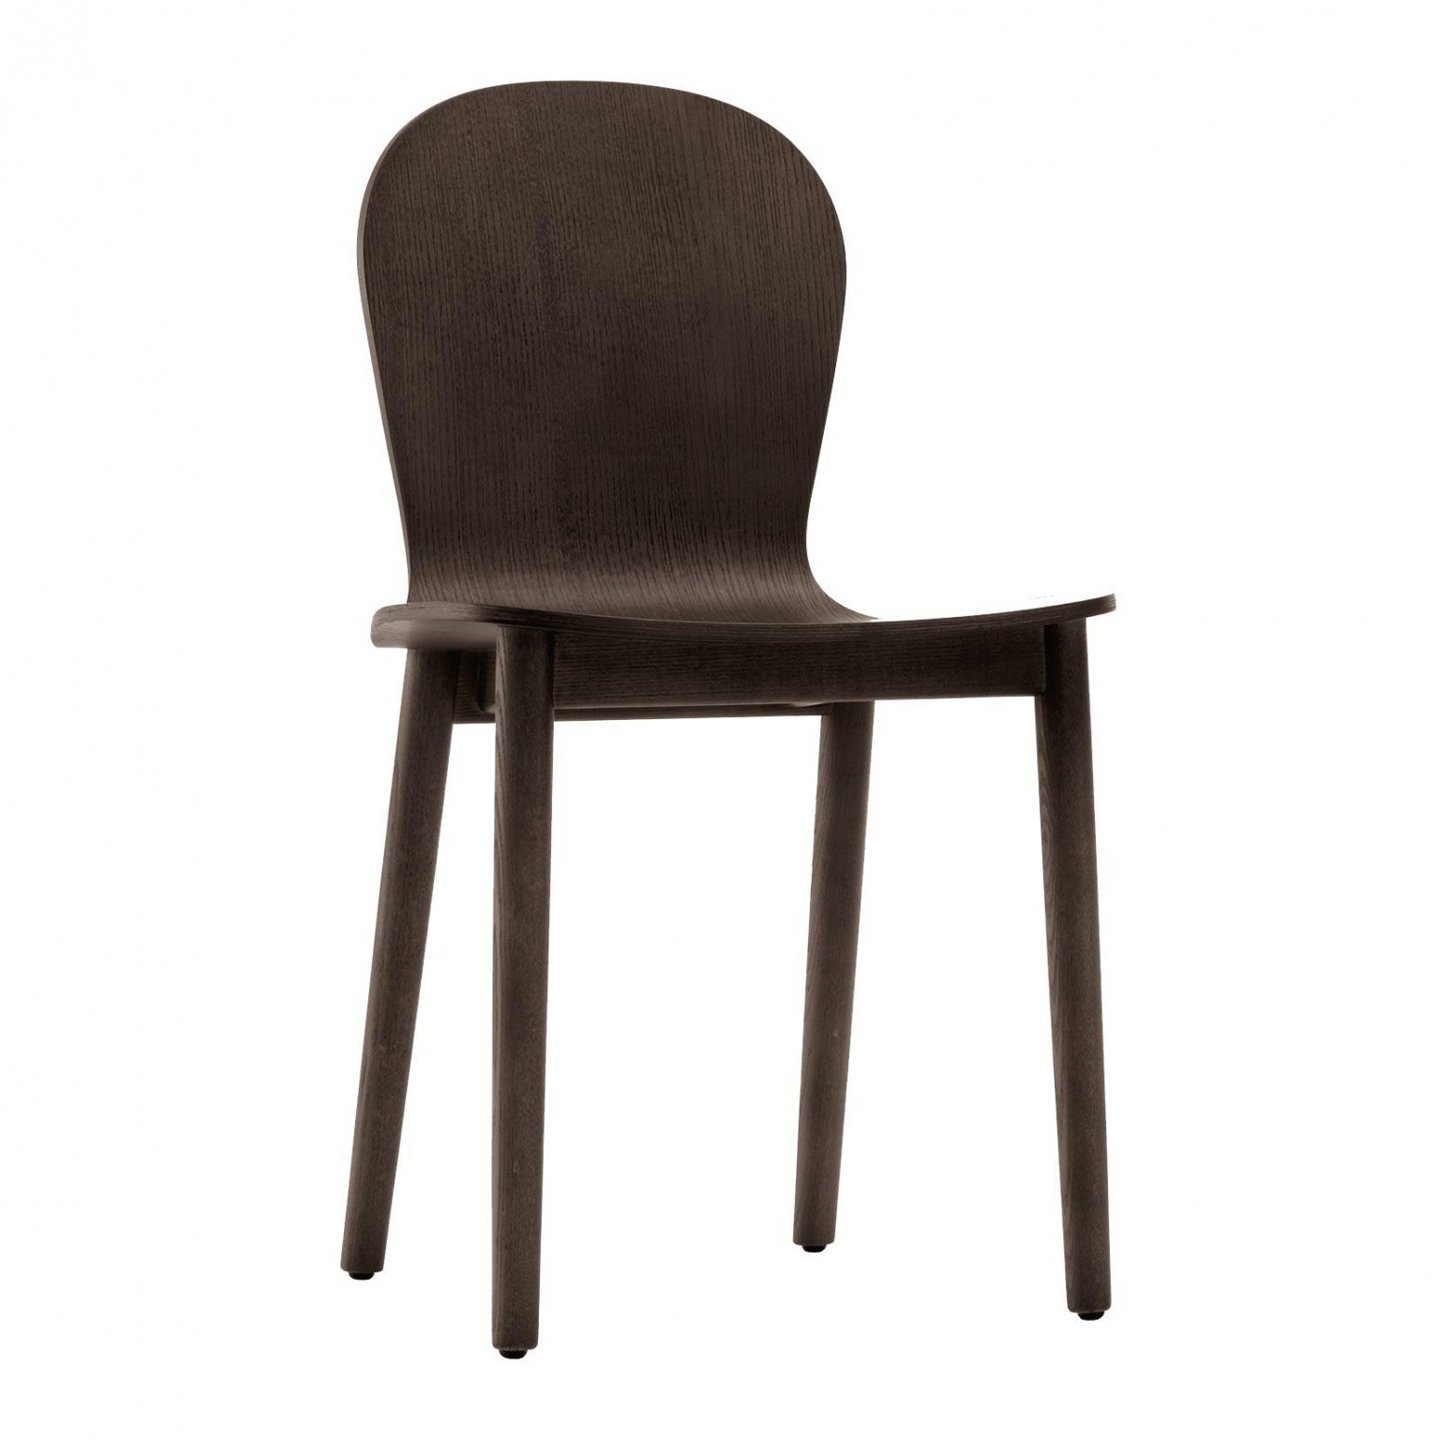 Haworth Bac Two chair in dark brown wood